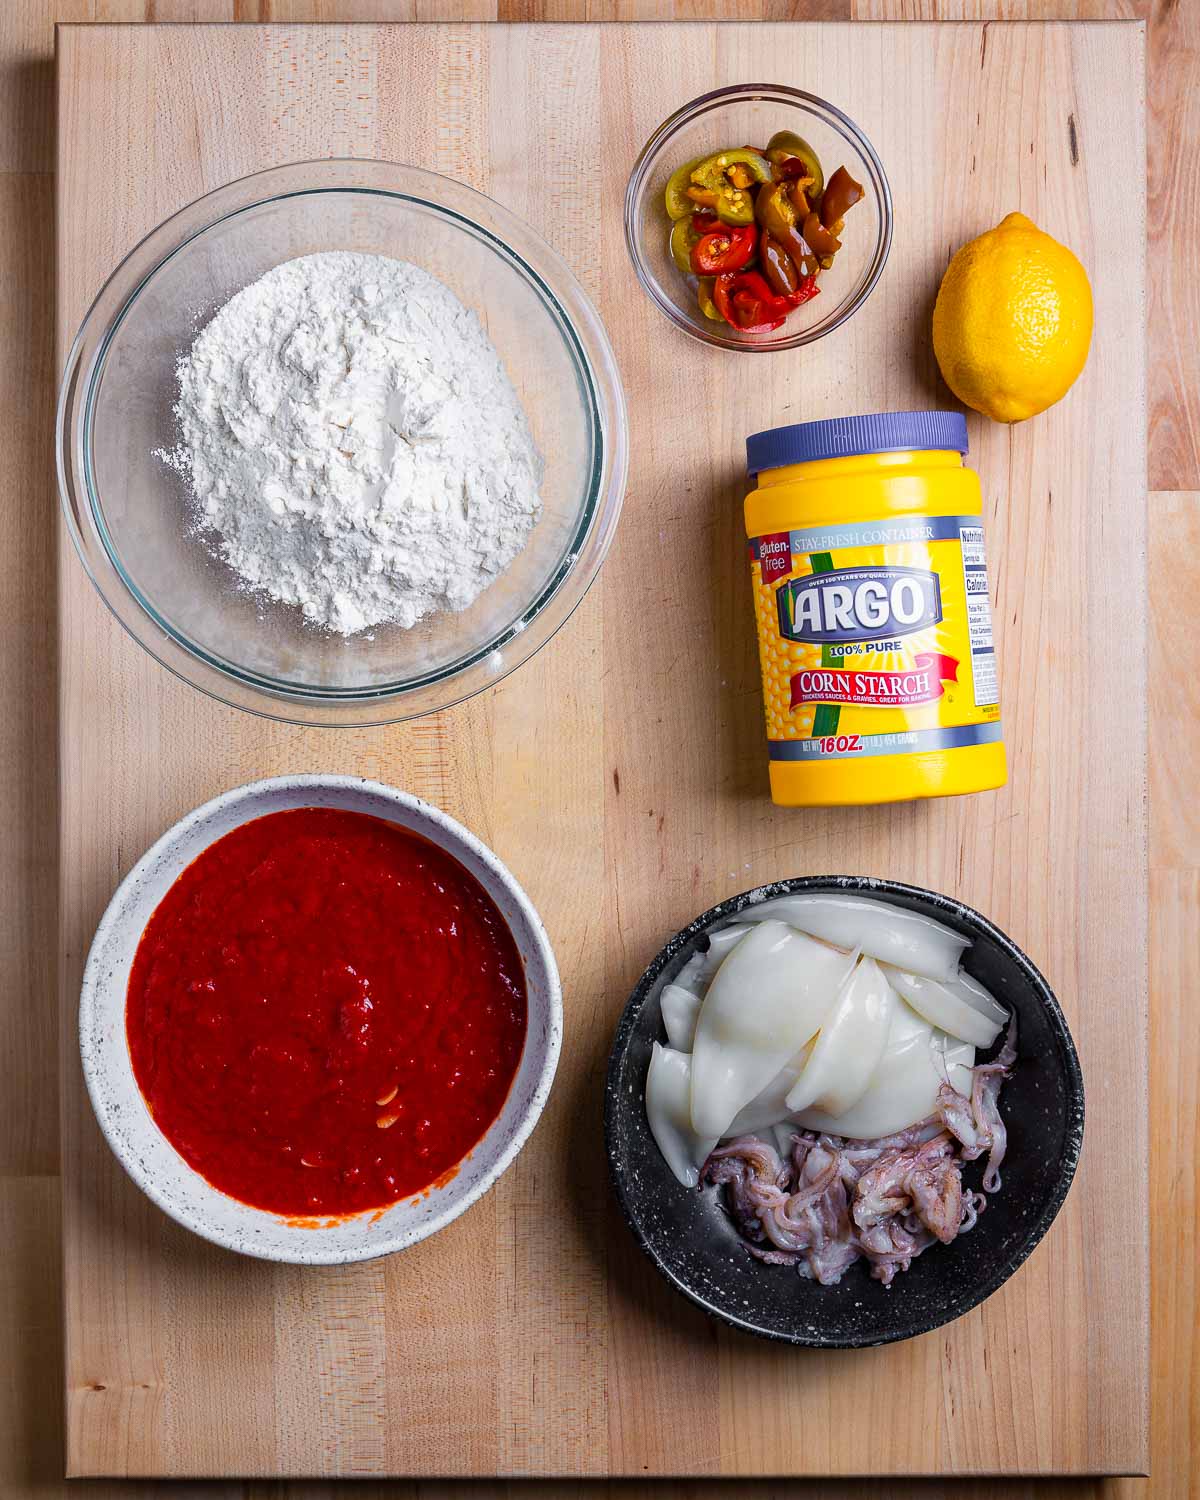 Ingredients shown: flour, cherry peppers, lemon, corn starch, marinara sauce, and calamari.